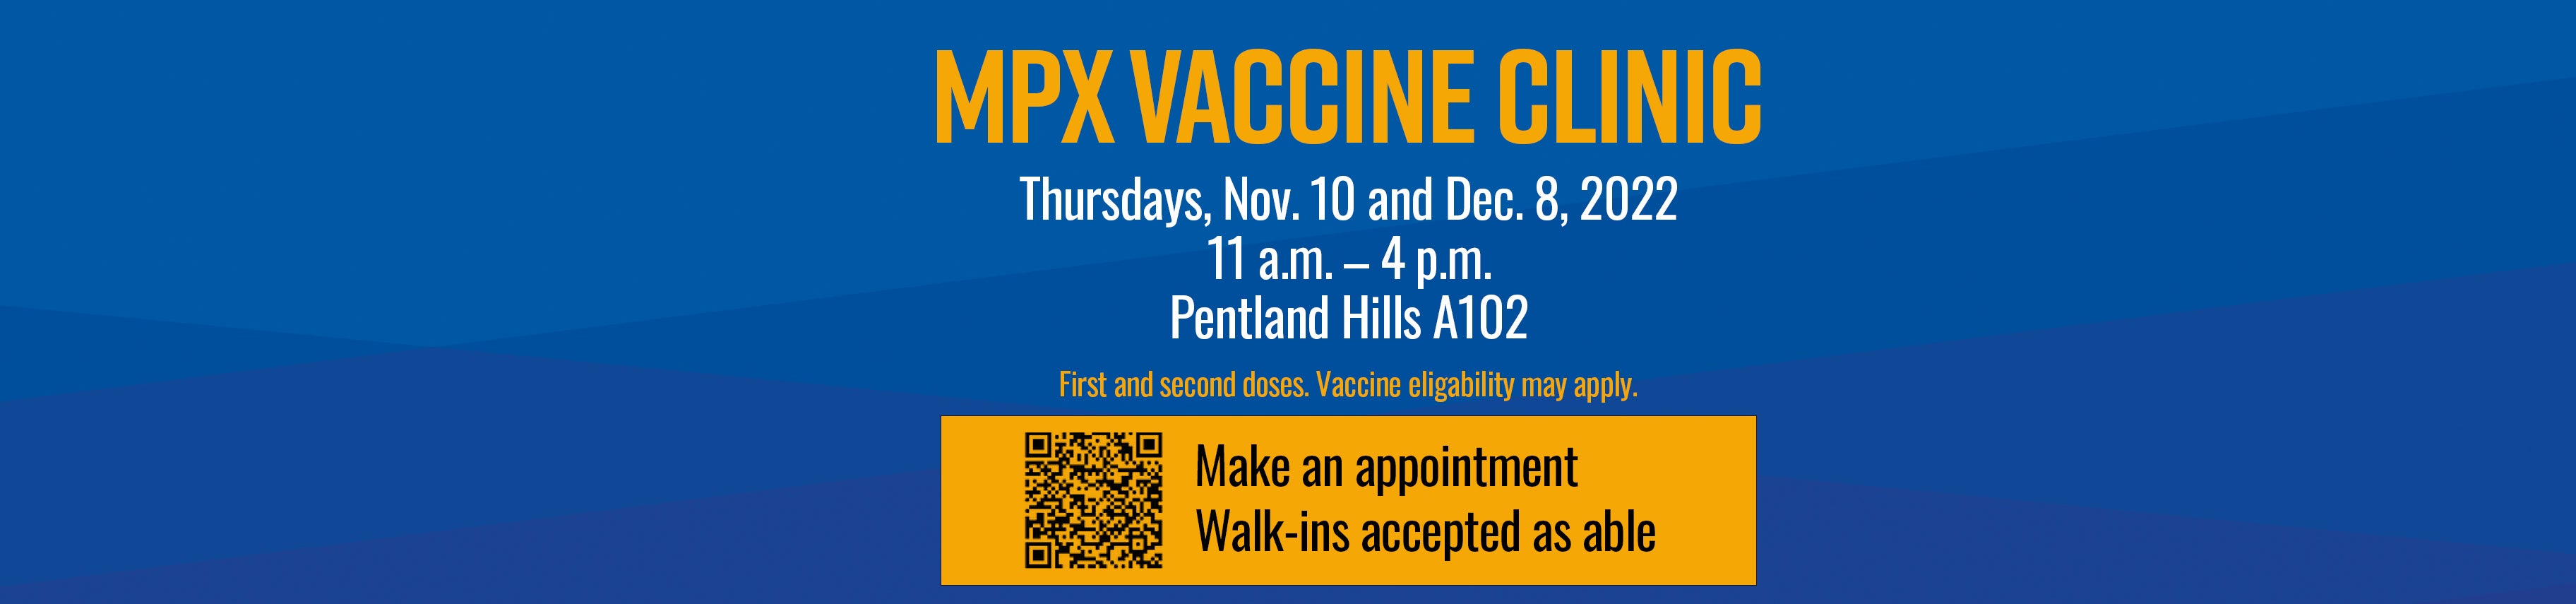 MPX Vaccine Clinic Thursday, Nov. 11 and Dec. 8, Pentland Hills A102